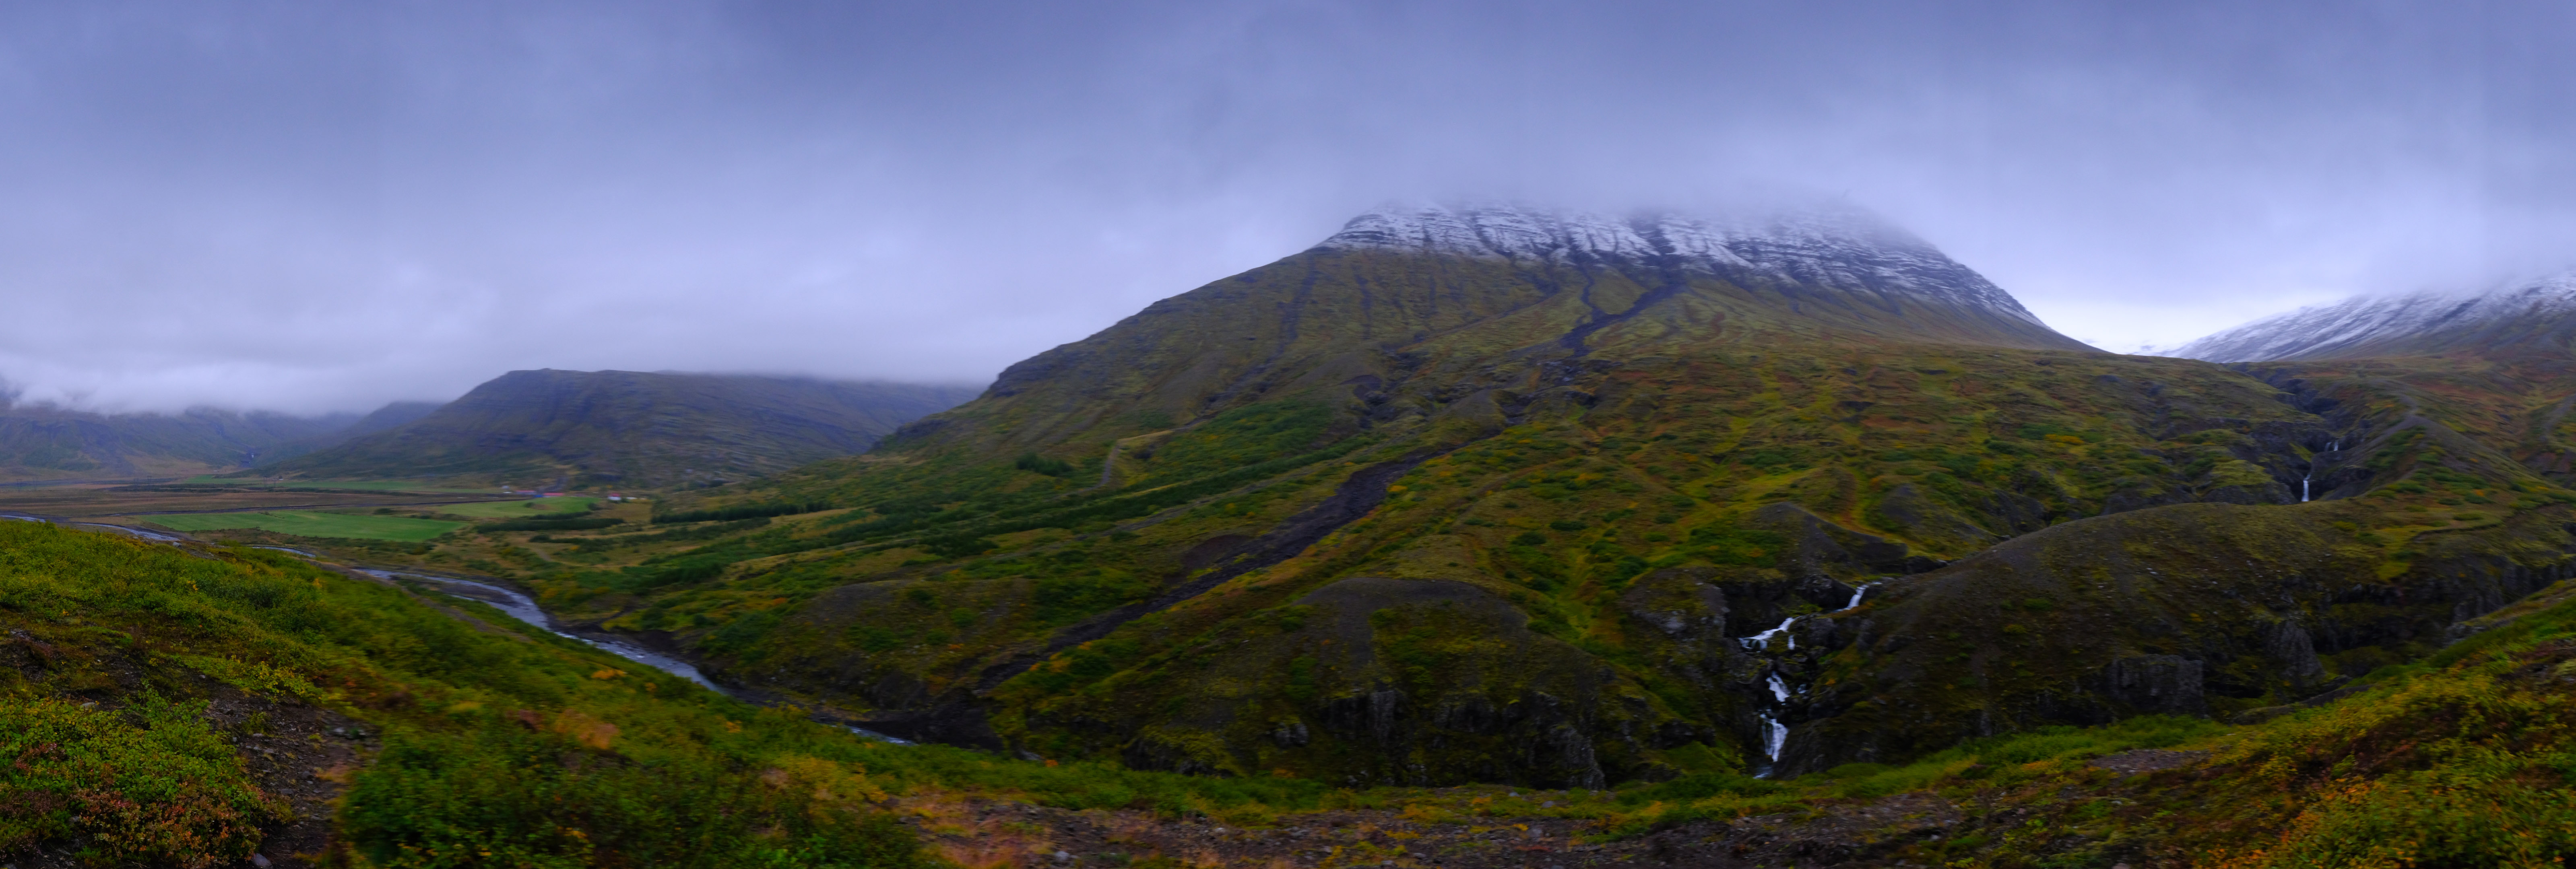 Iceland, Travel photography